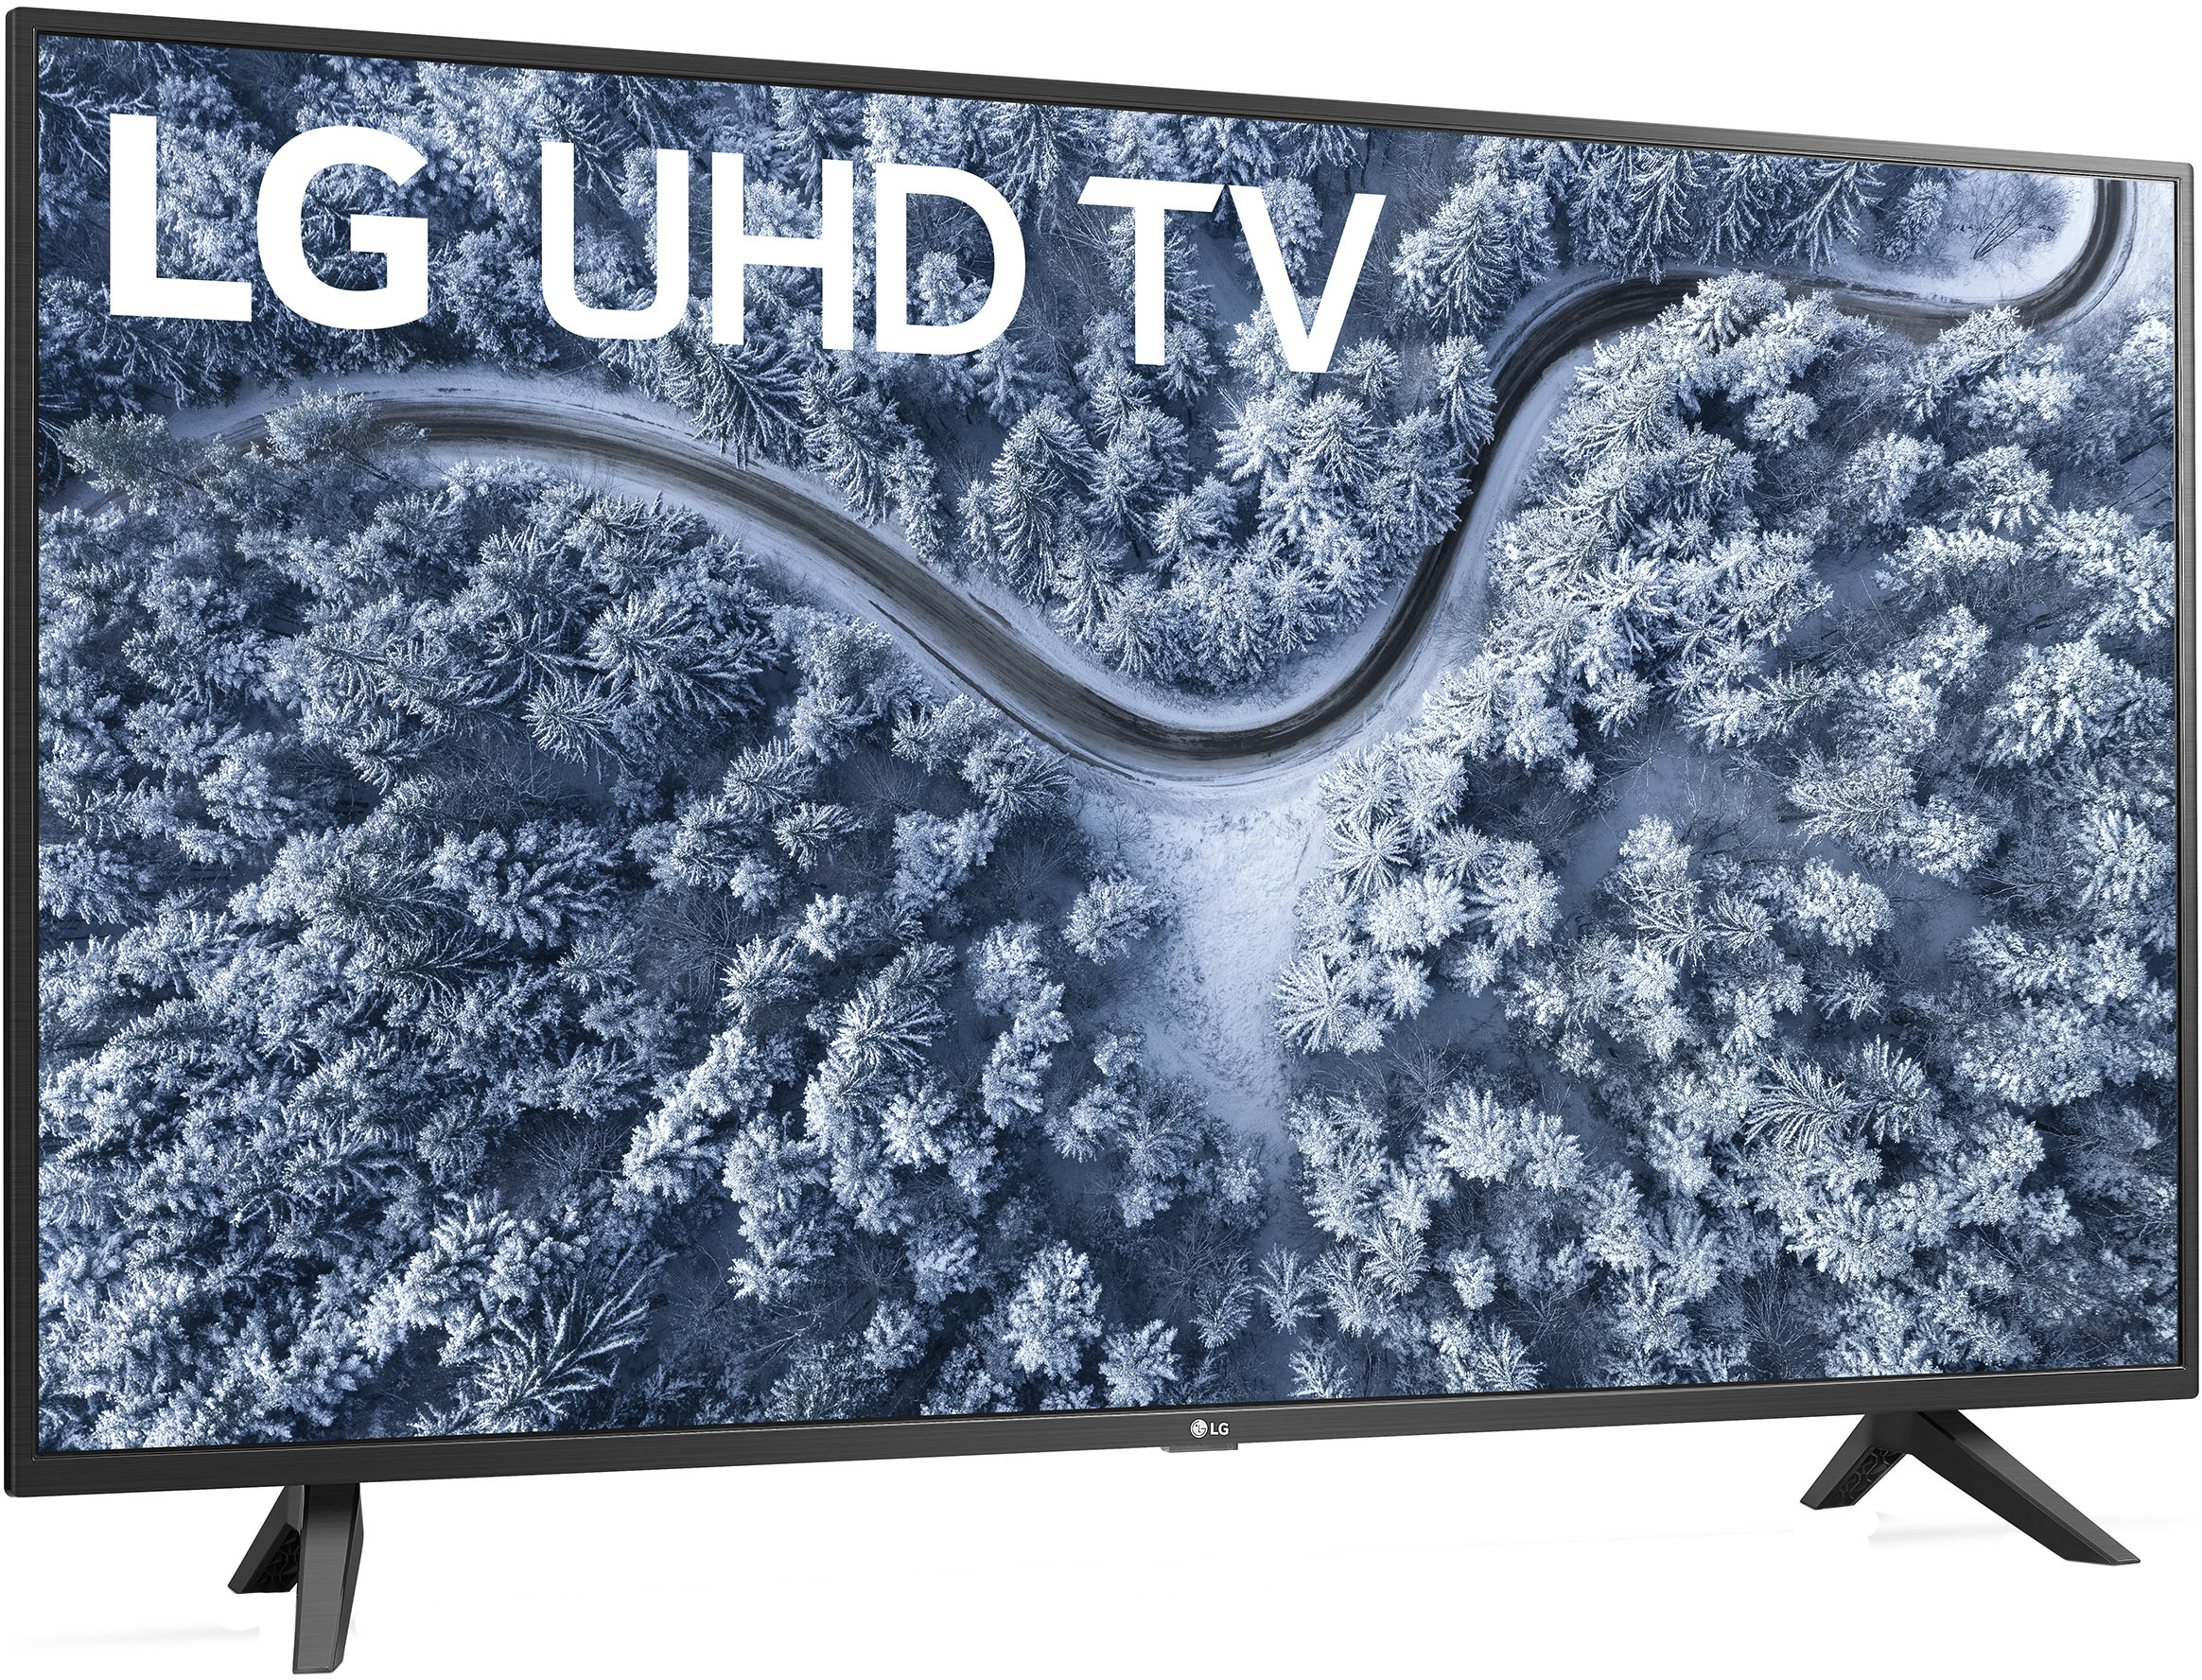 Angle View: LG - 50" Class UP7000 Series LED 4K UHD Smart webOS TV